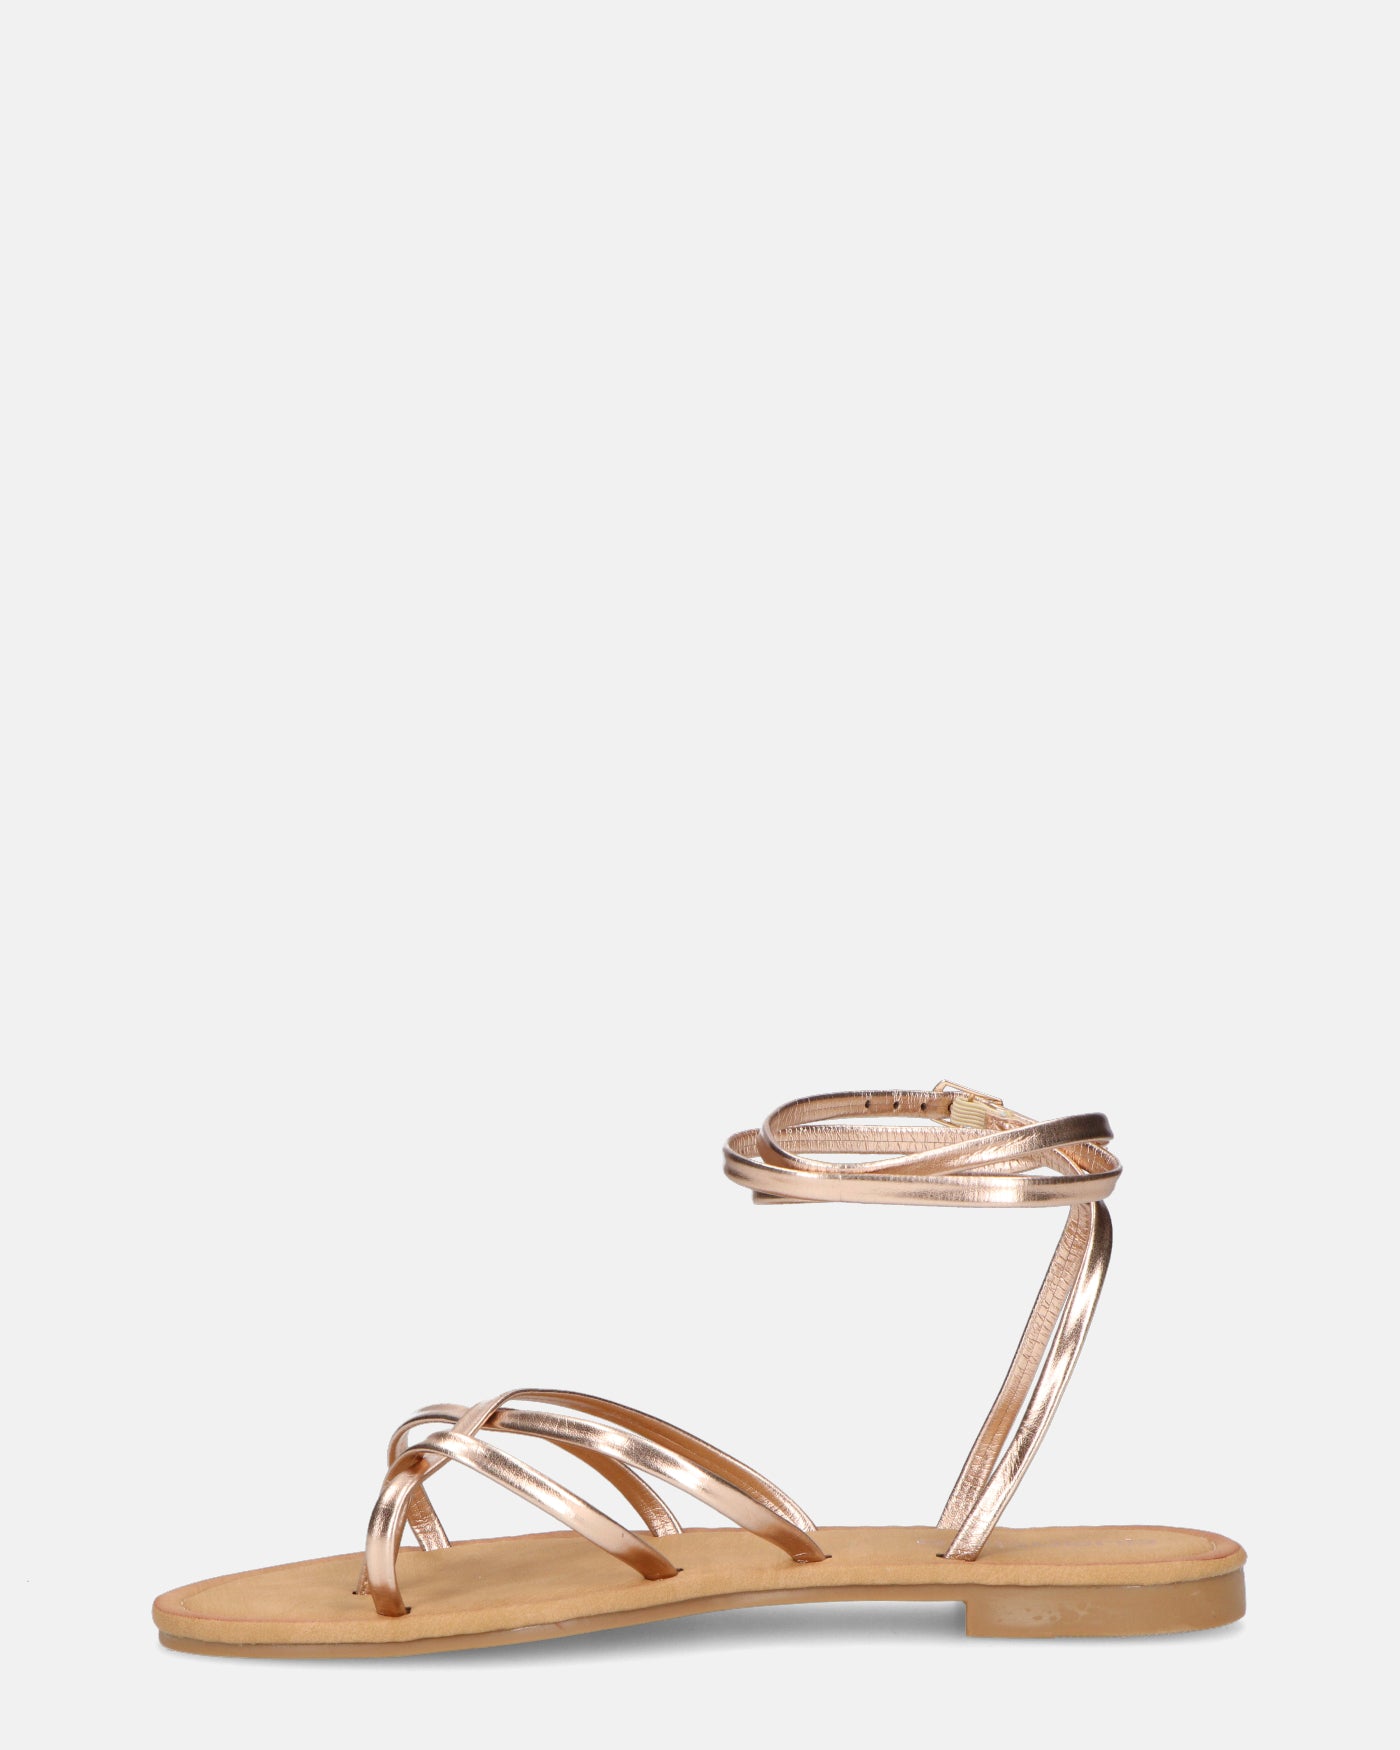 NINA - sandalias planas con tira y bandas color bronce